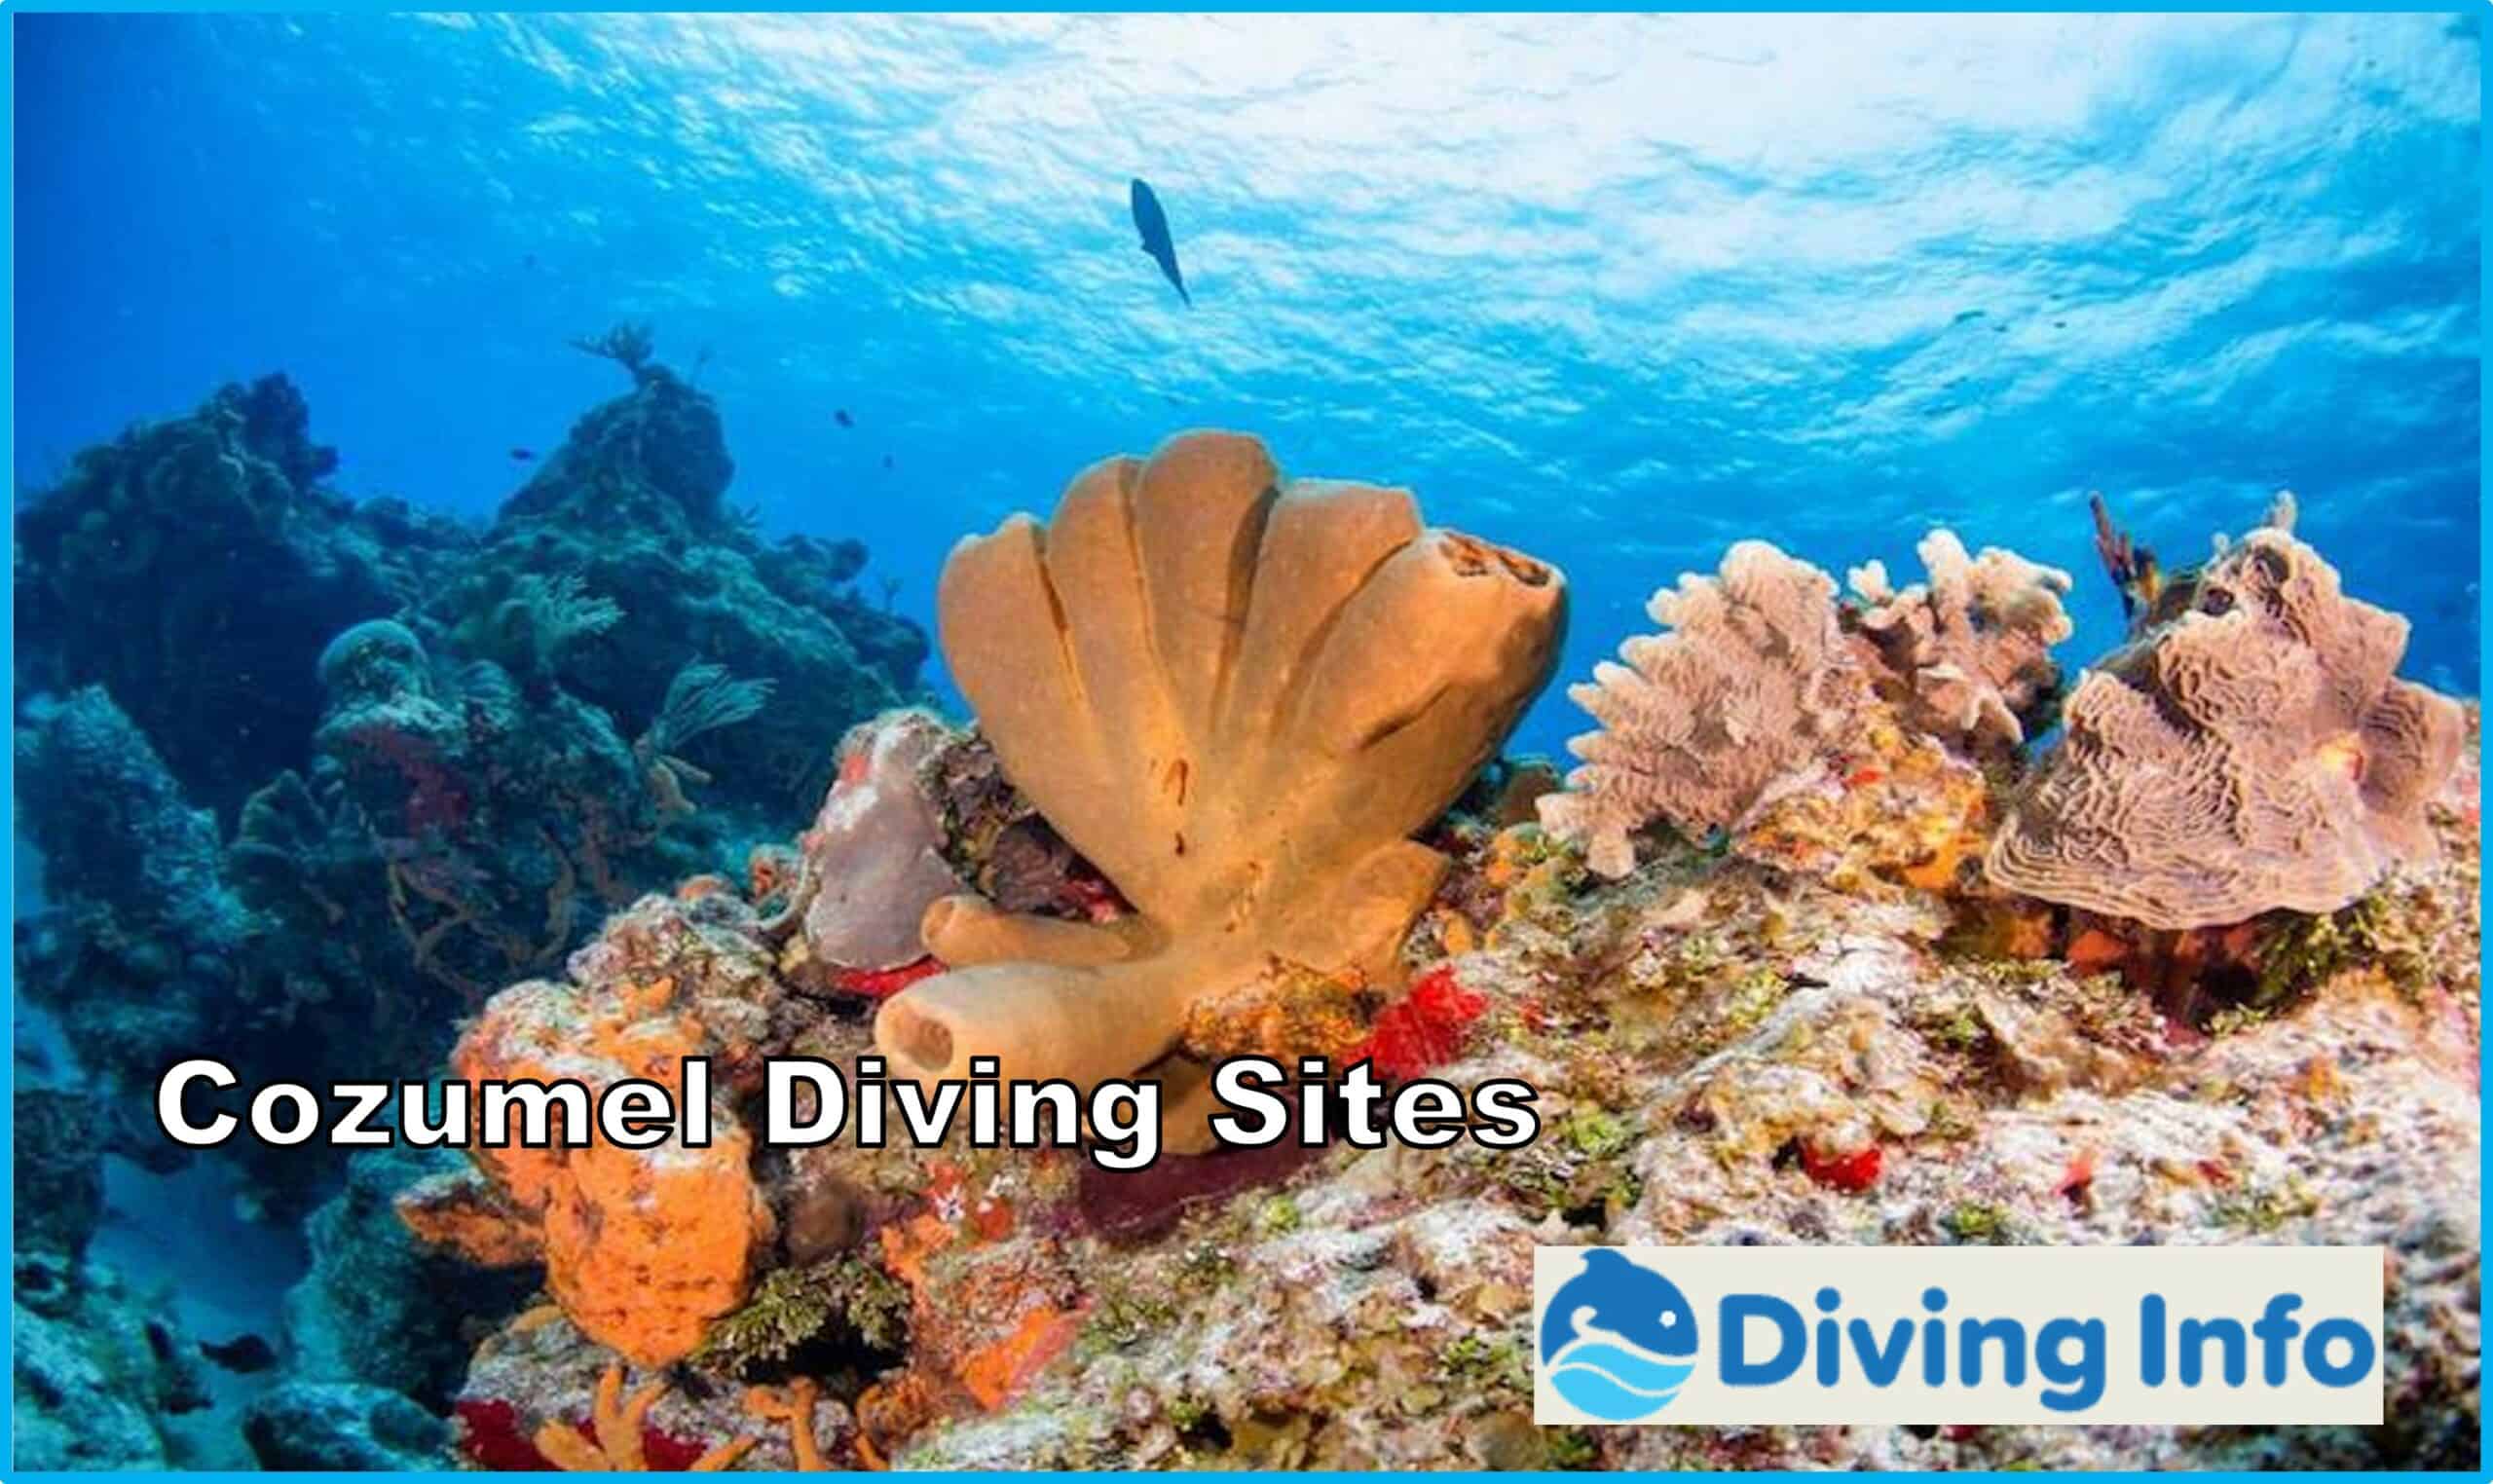 Cozumel Diving Sites